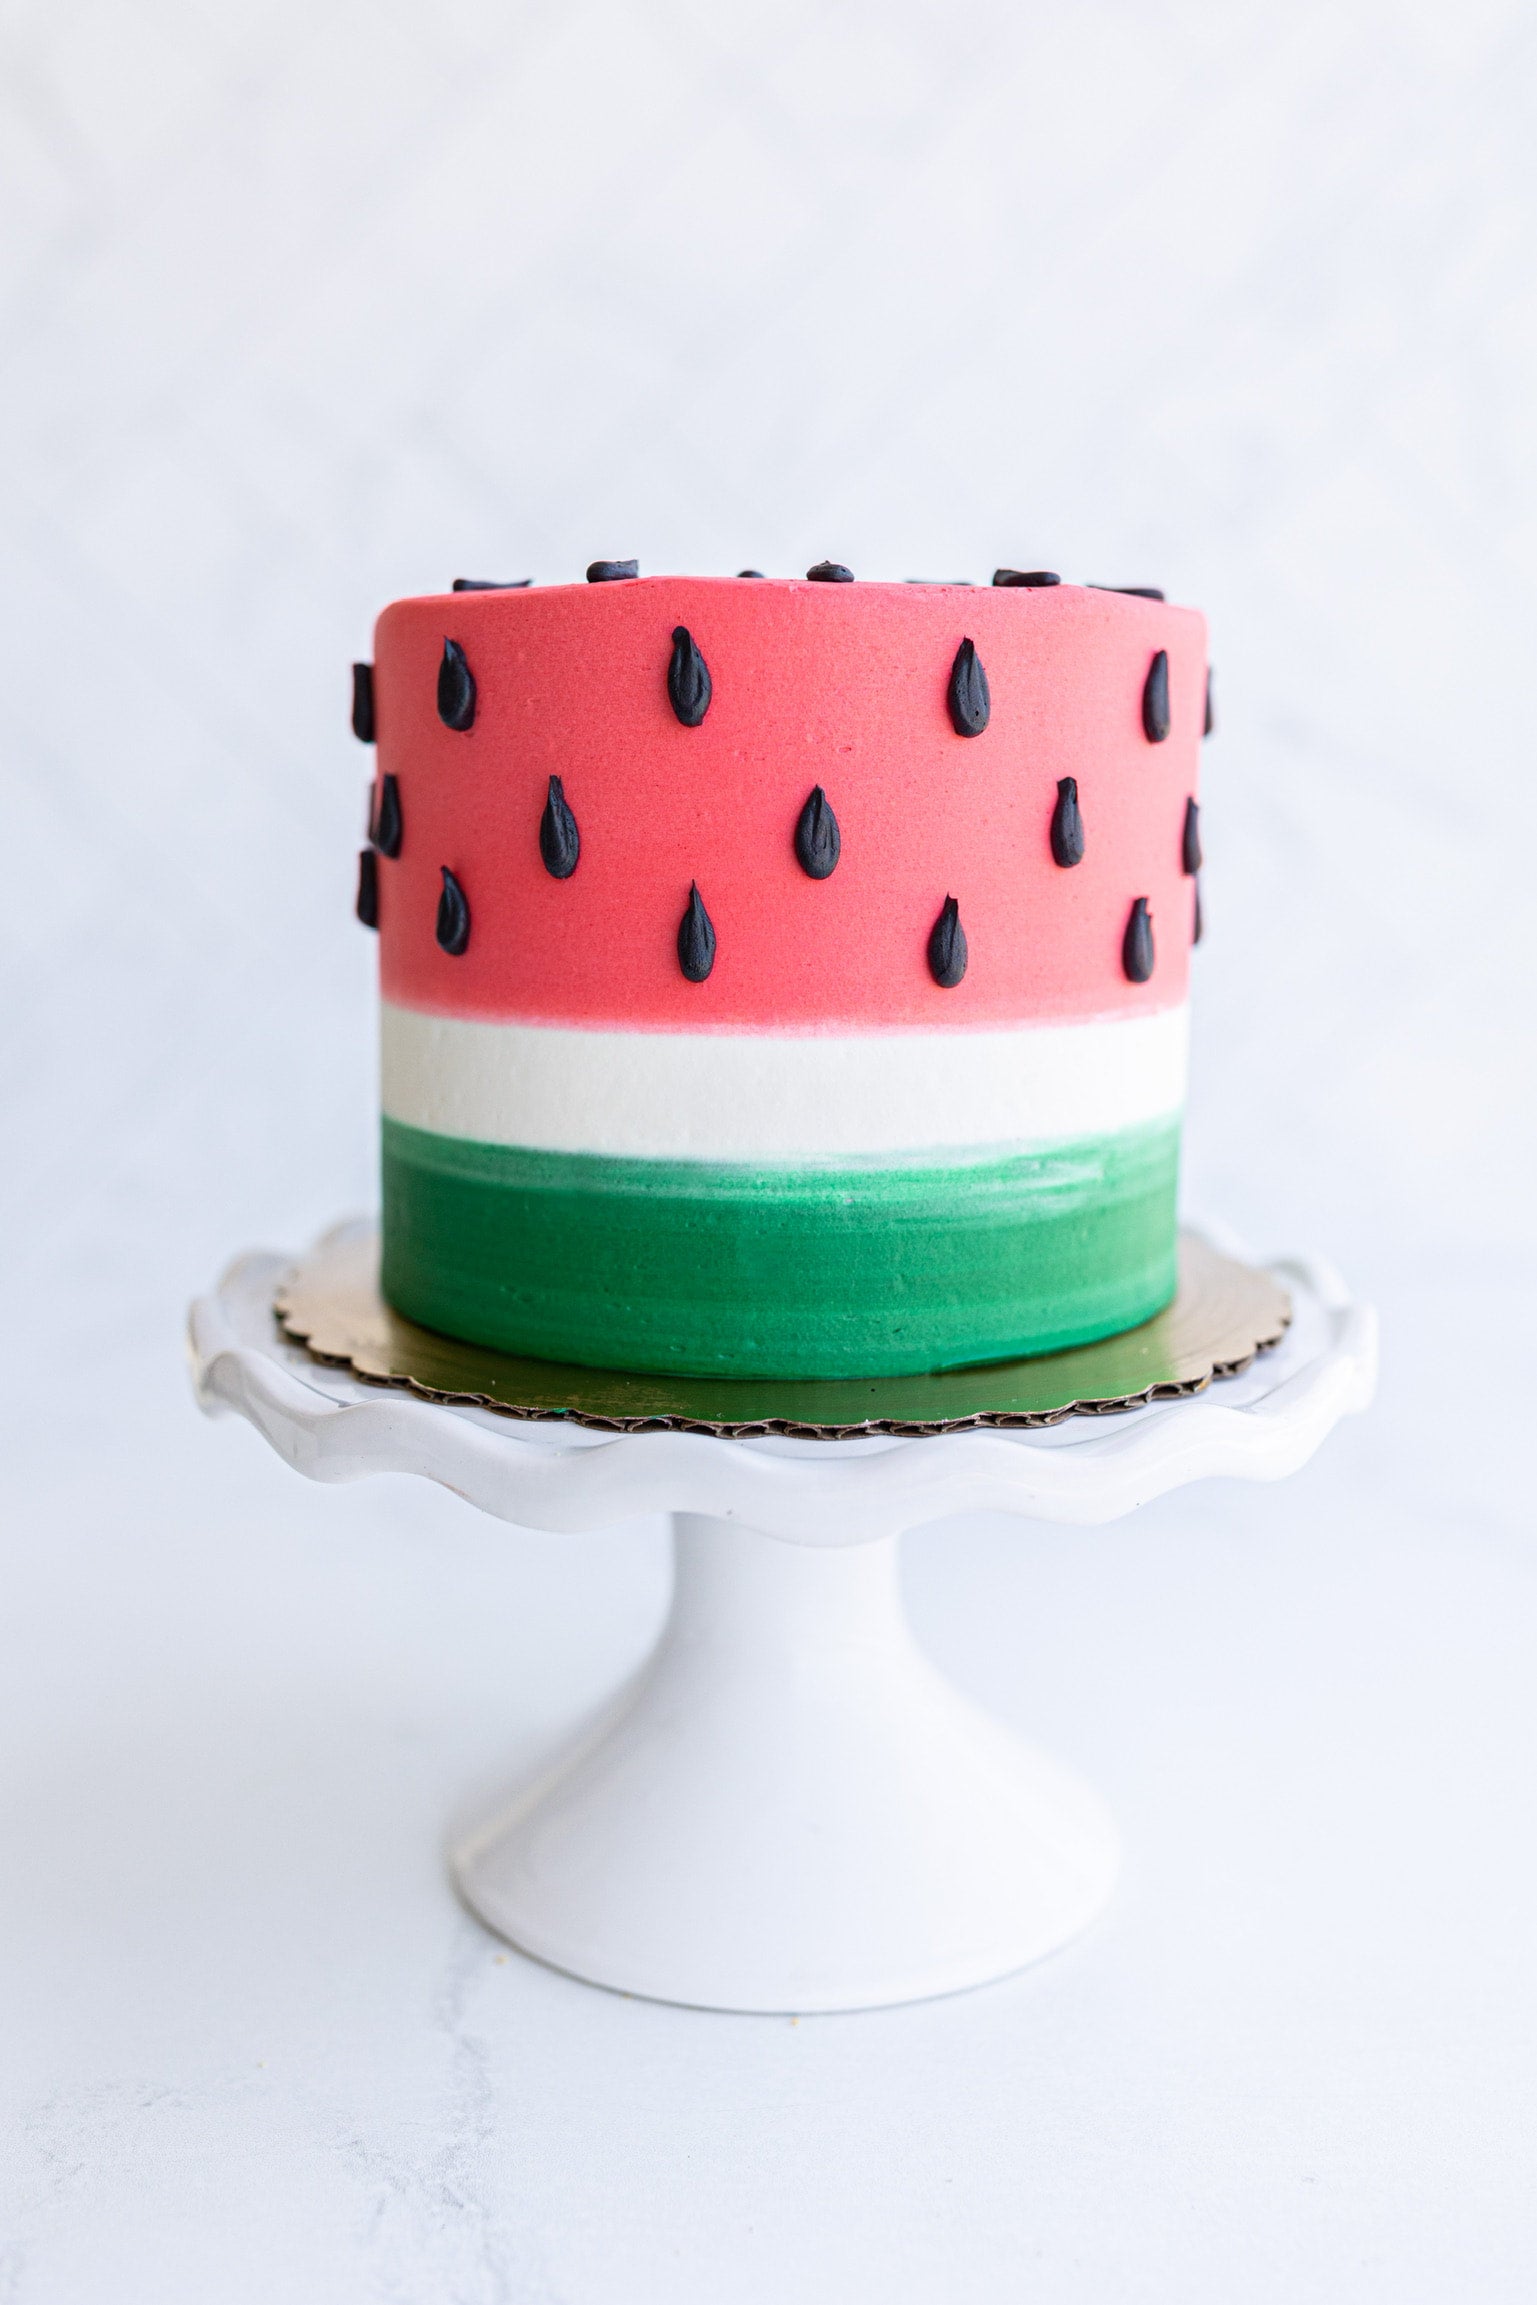 12,030 Watermelon Cake Images, Stock Photos & Vectors | Shutterstock